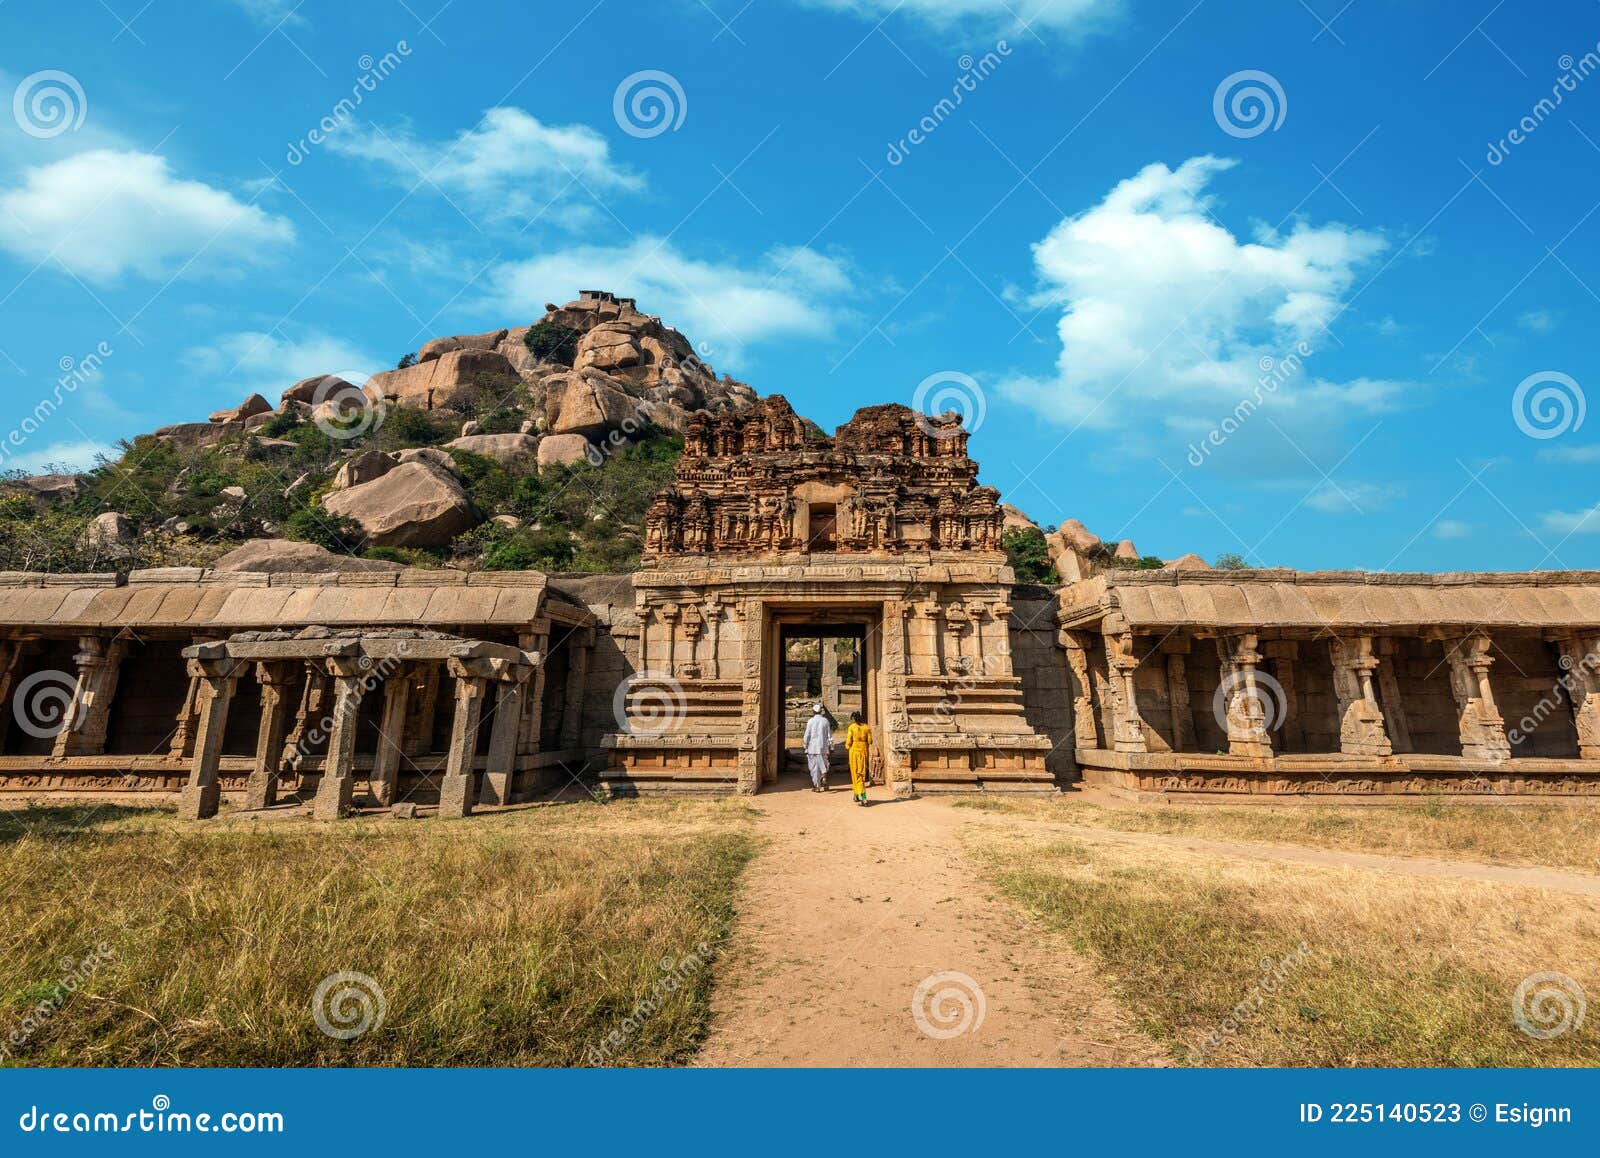 Hampi, Karnataka, India - Nov 3 2022 - Tourists at the Vijaya Vitthala Temple in Hampi which is an iconic monument 21903684 Stock Photo at Vecteezy